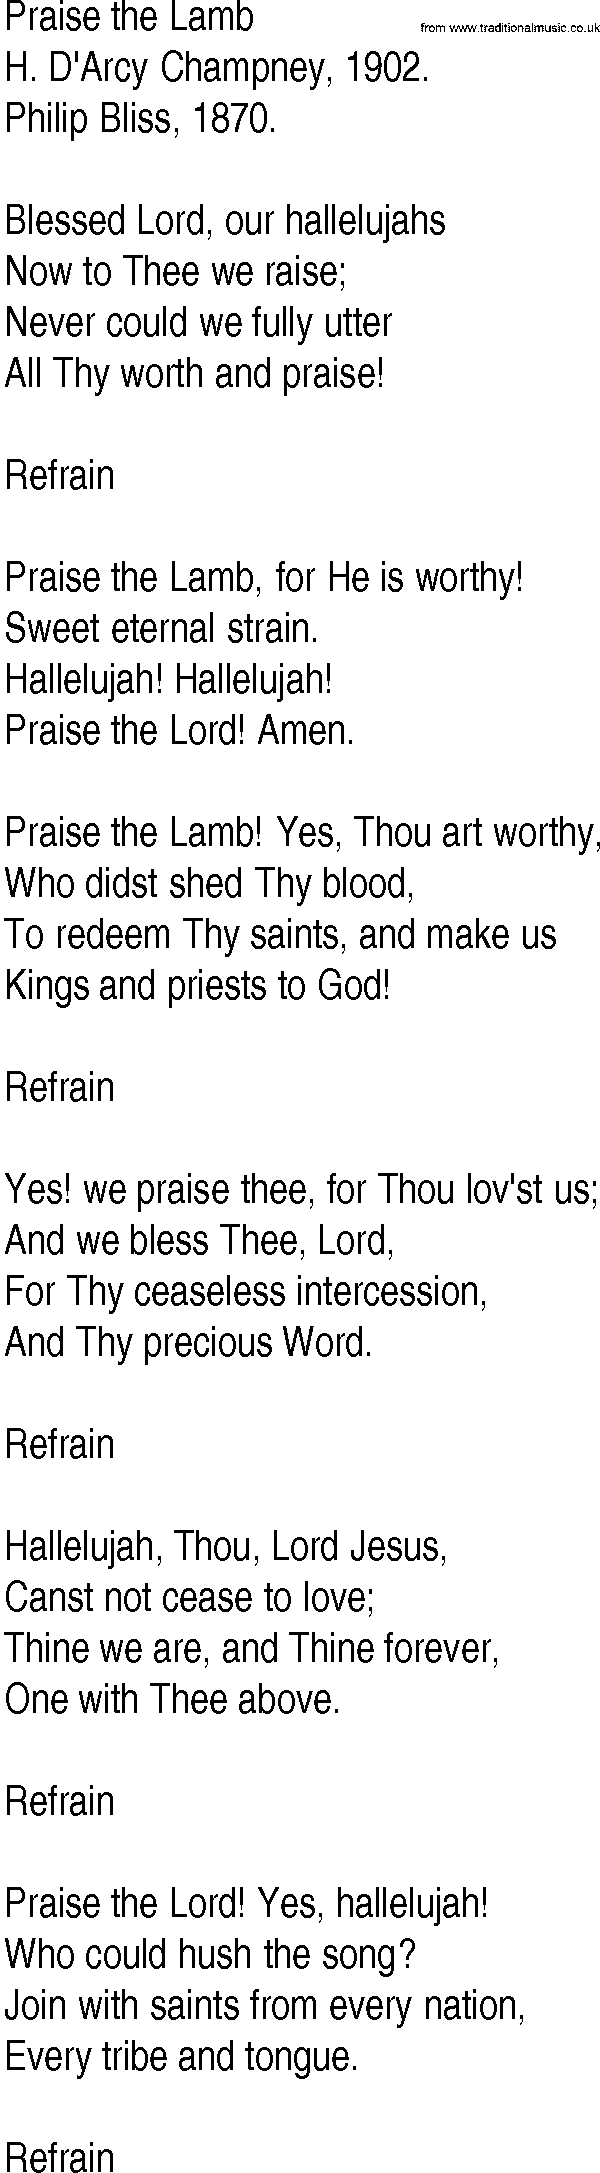 Hymn and Gospel Song: Praise the Lamb by H D'Arcy Champney lyrics